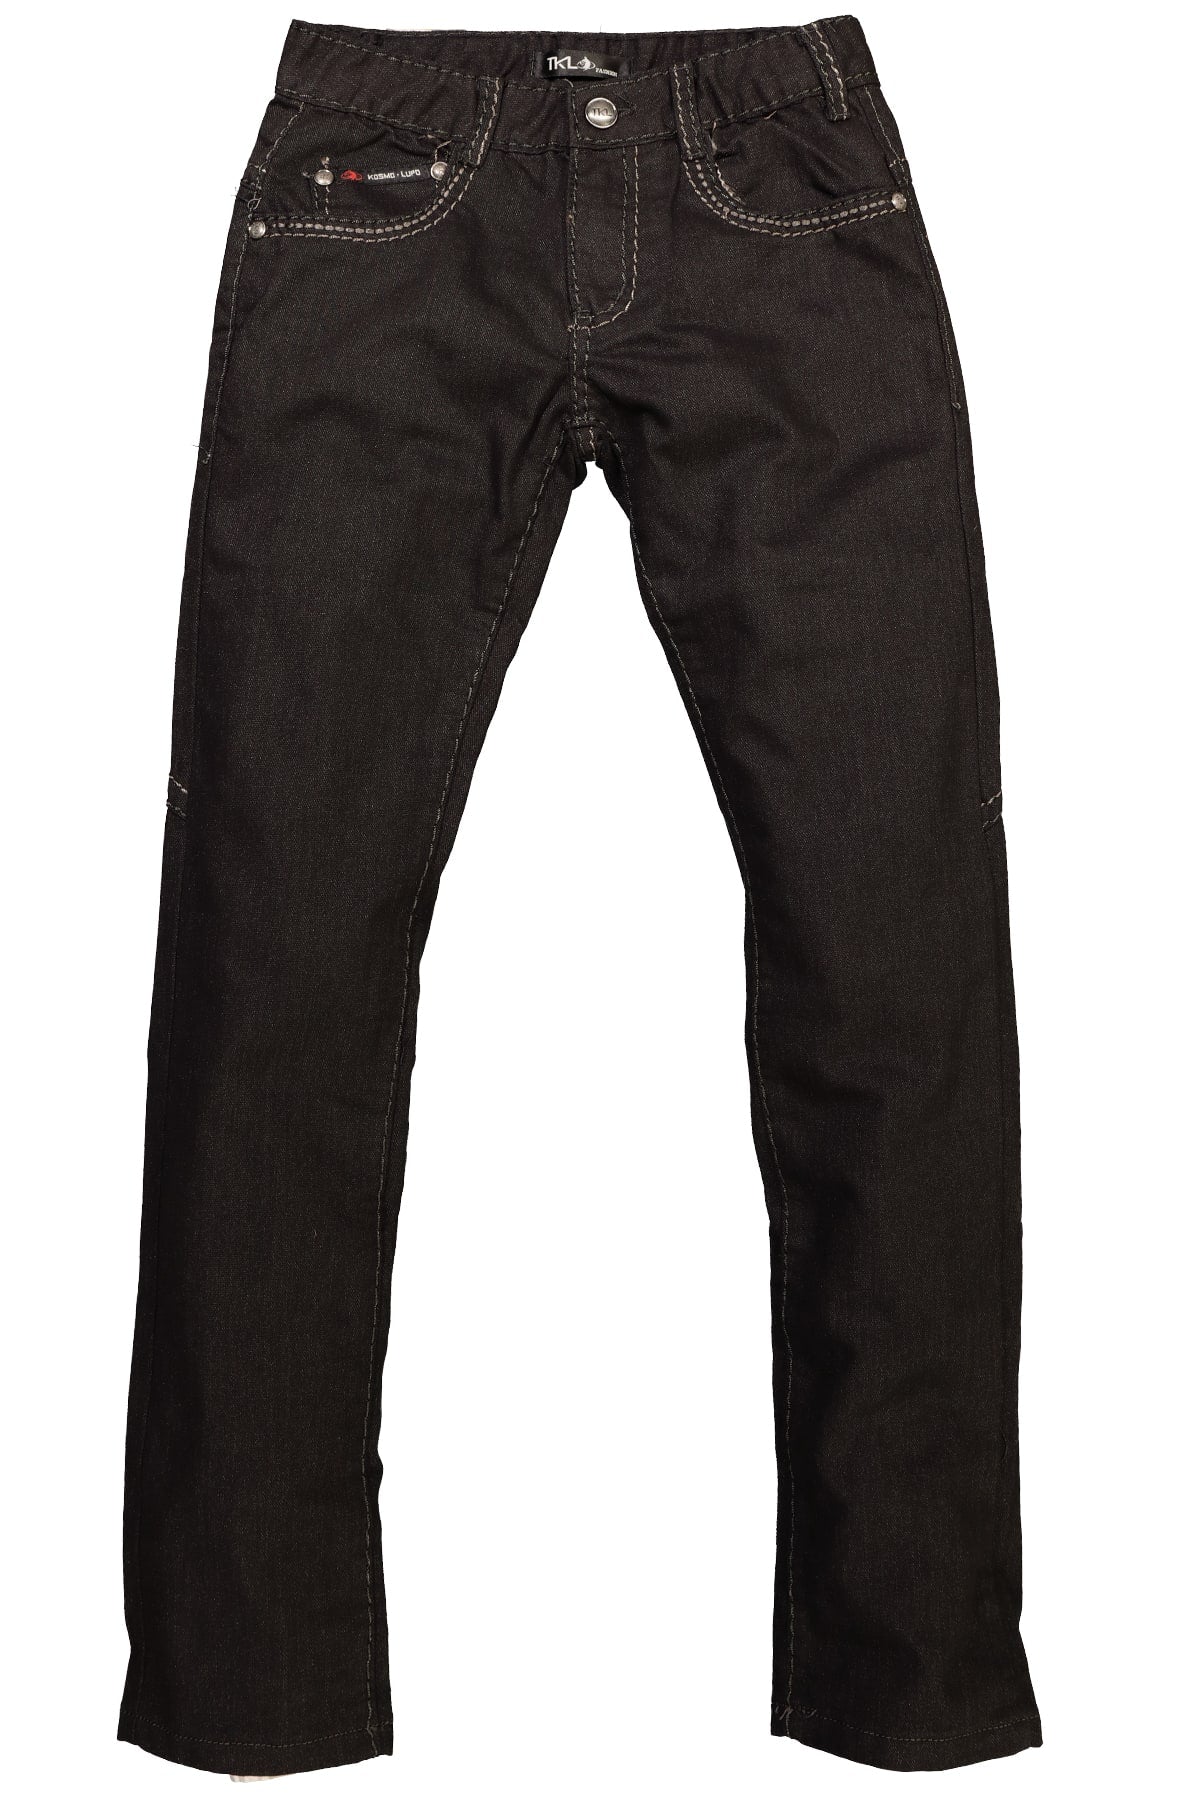 Kosmo Lupo Jeans Dark Wash Large Stitch Denim Pant